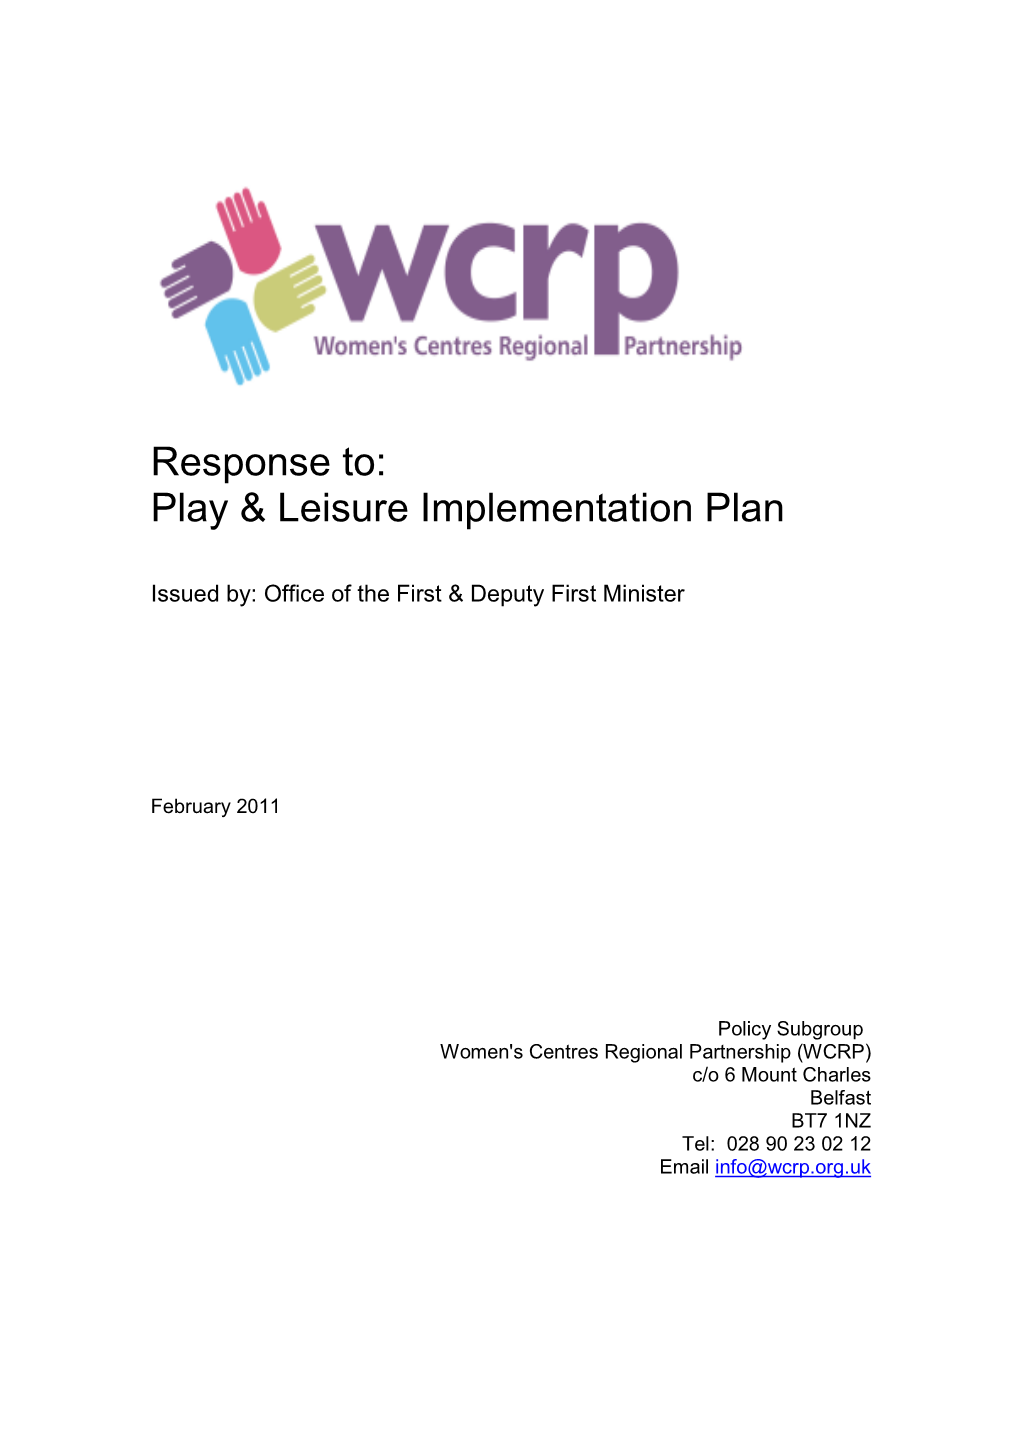 Response To: Play & Leisure Implementation Plan